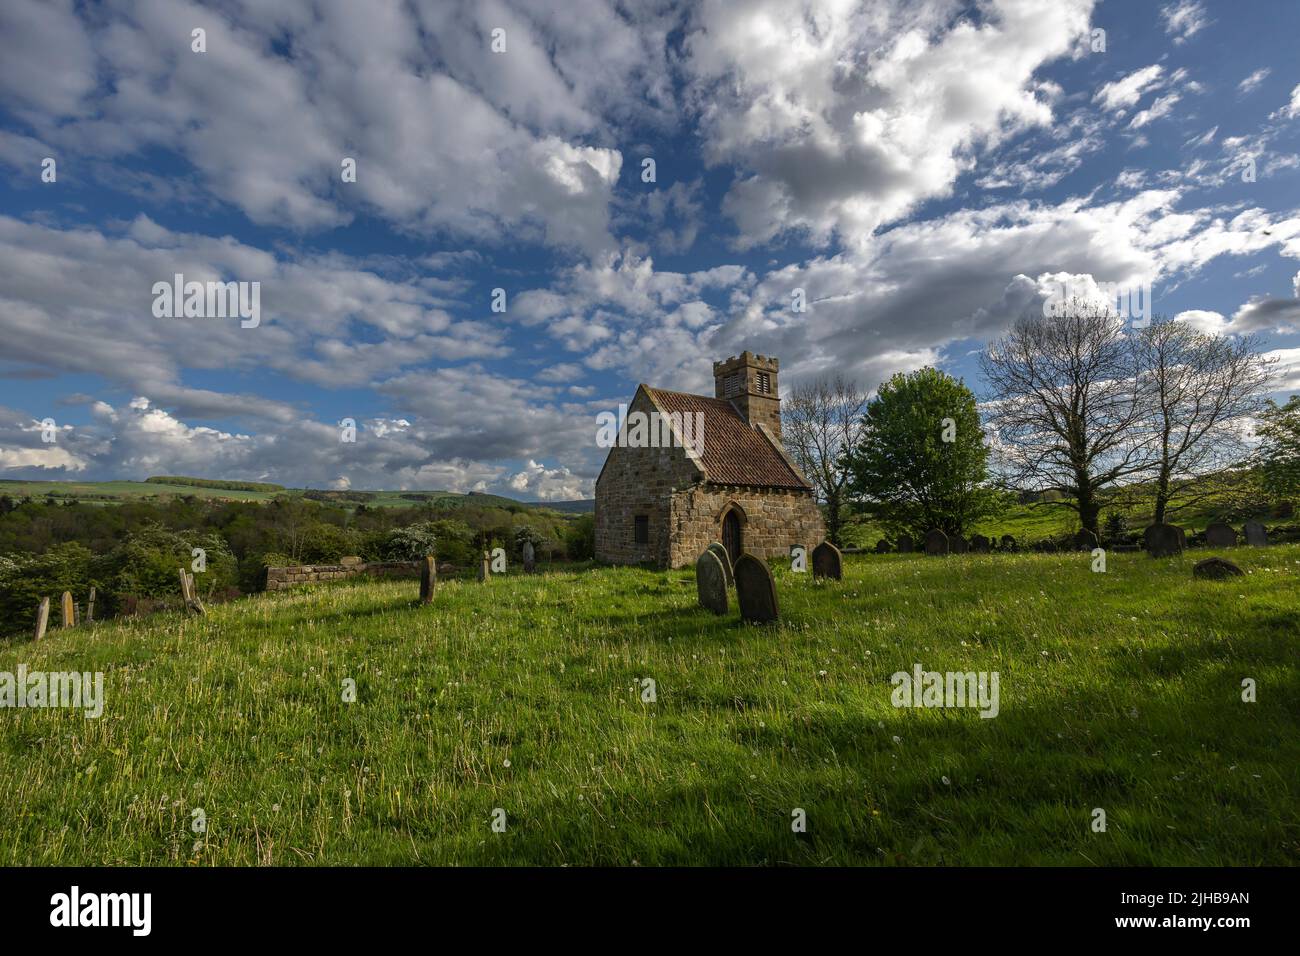 St Andrews Little Church, Upleatham, Guisborough, Cleveland. El más pequeño de Inglaterra Foto de stock